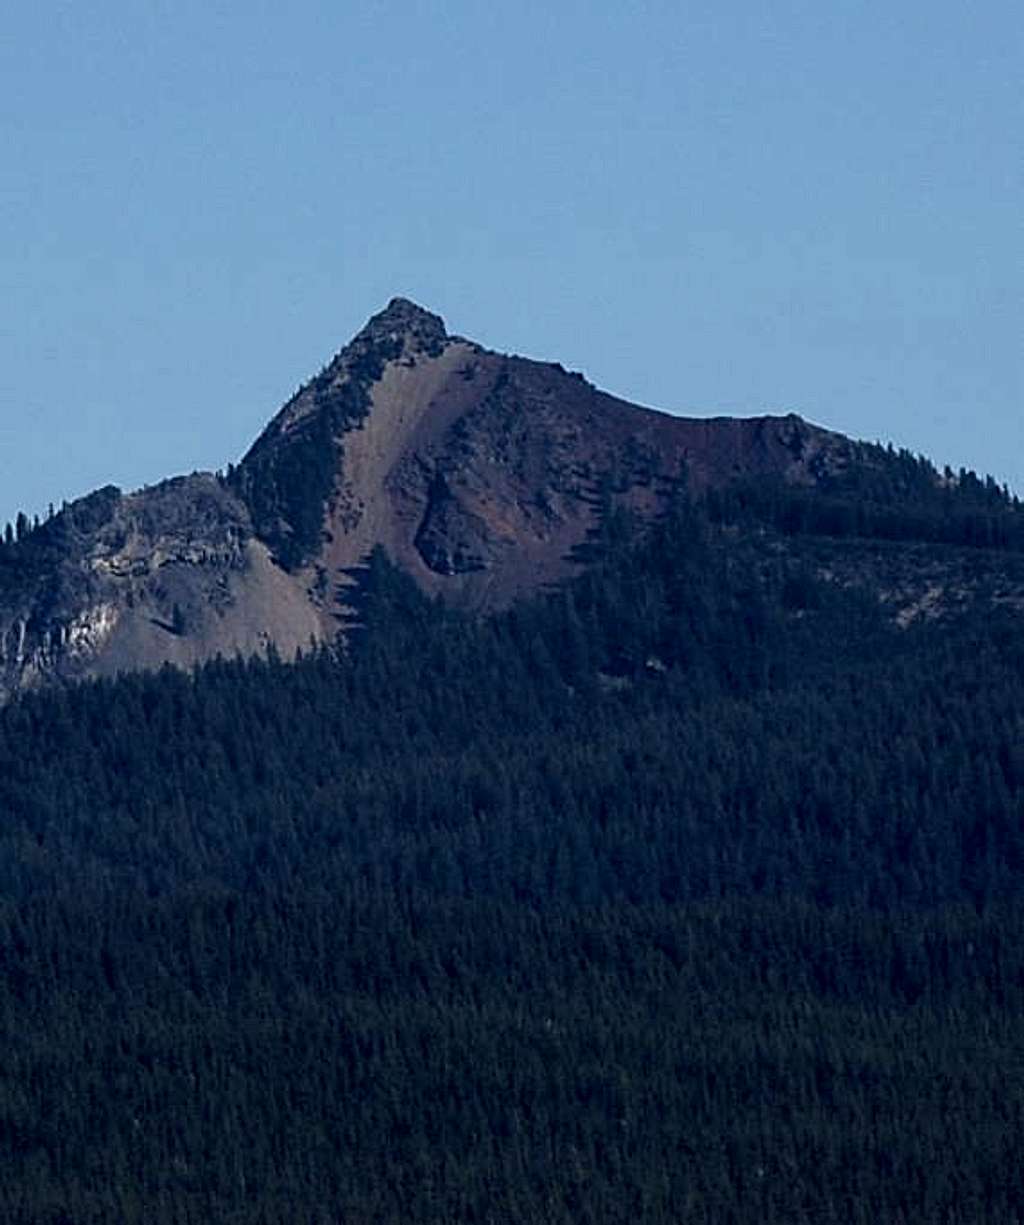 Cowhorn Mt. from Rockpile Trail near Diamond Peak